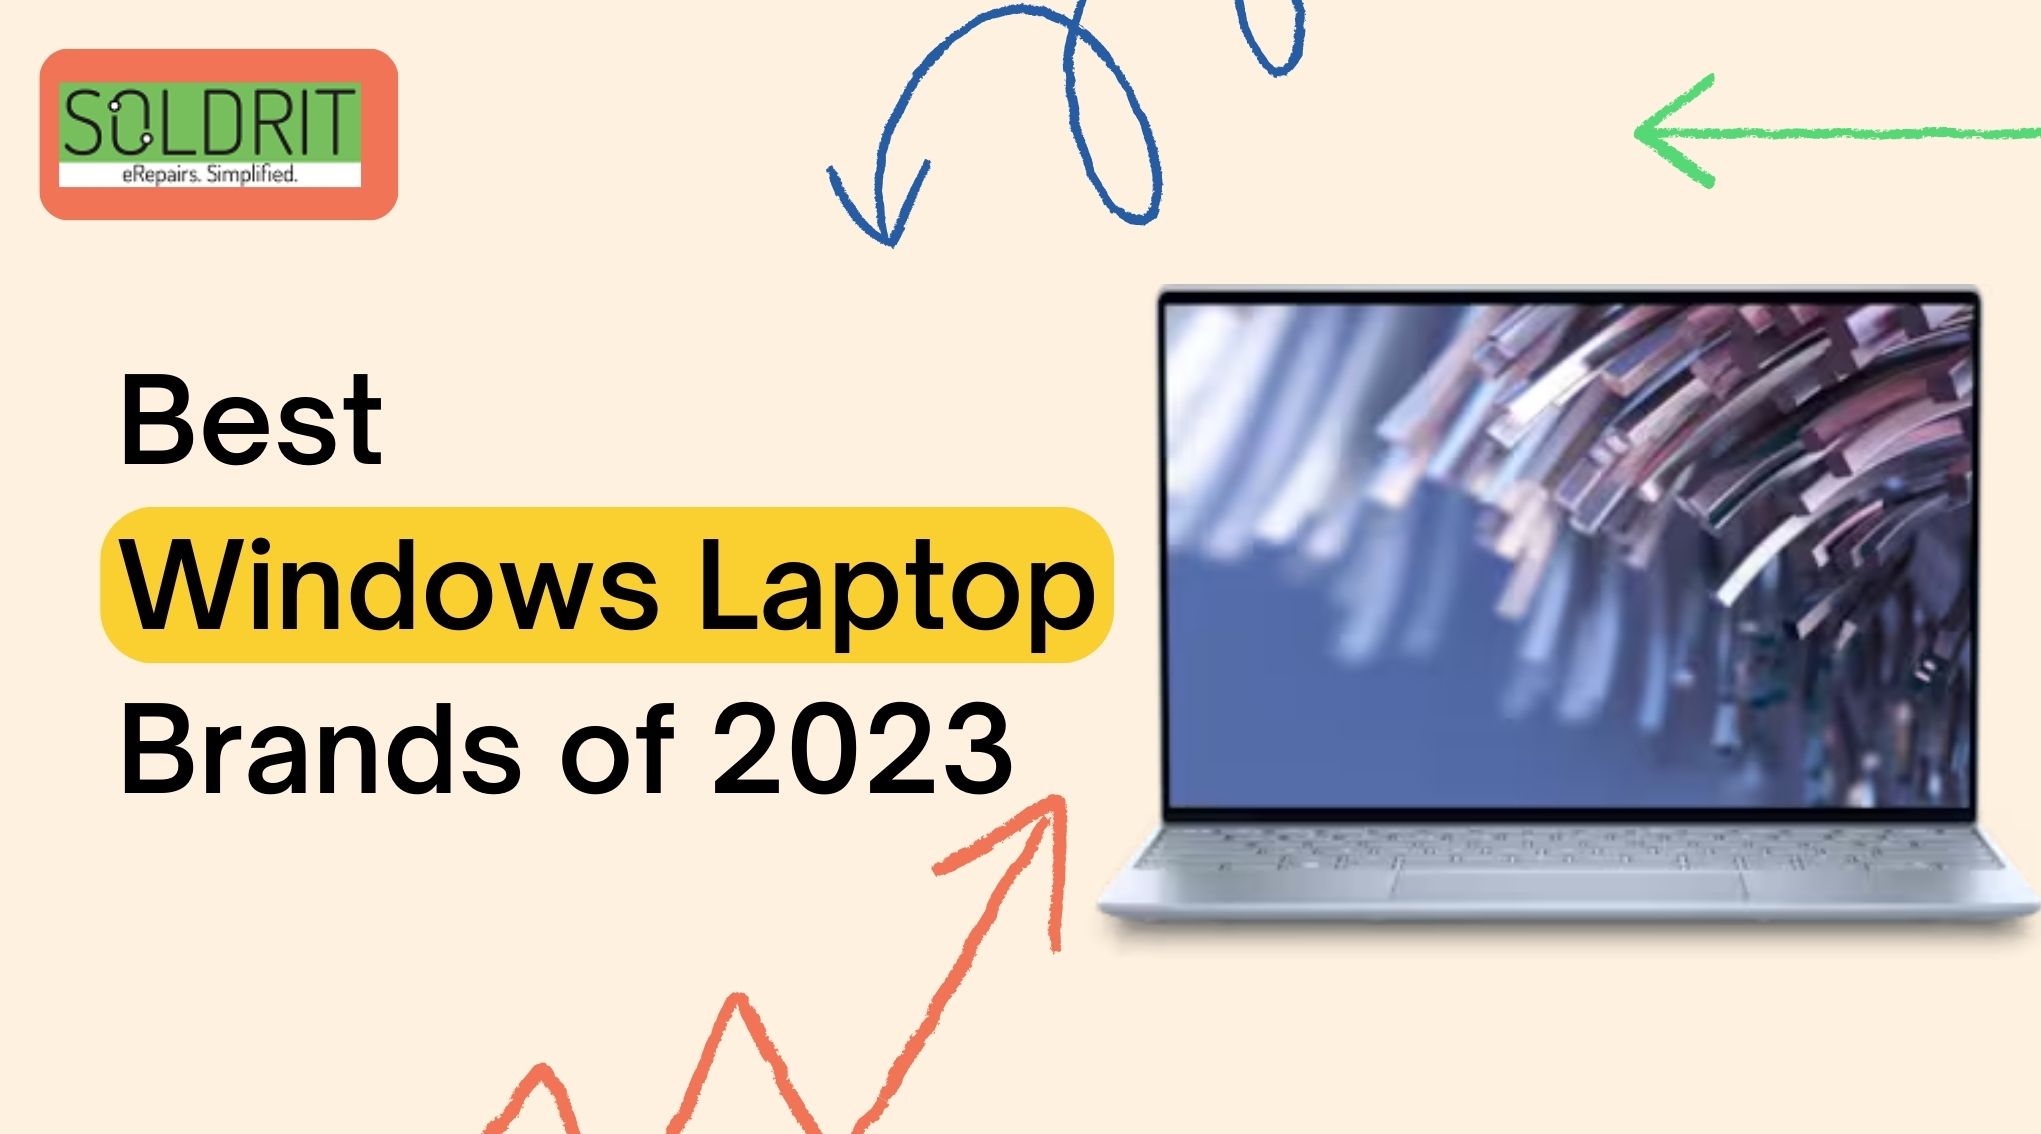 The Best Windows Laptop Brands of 2023